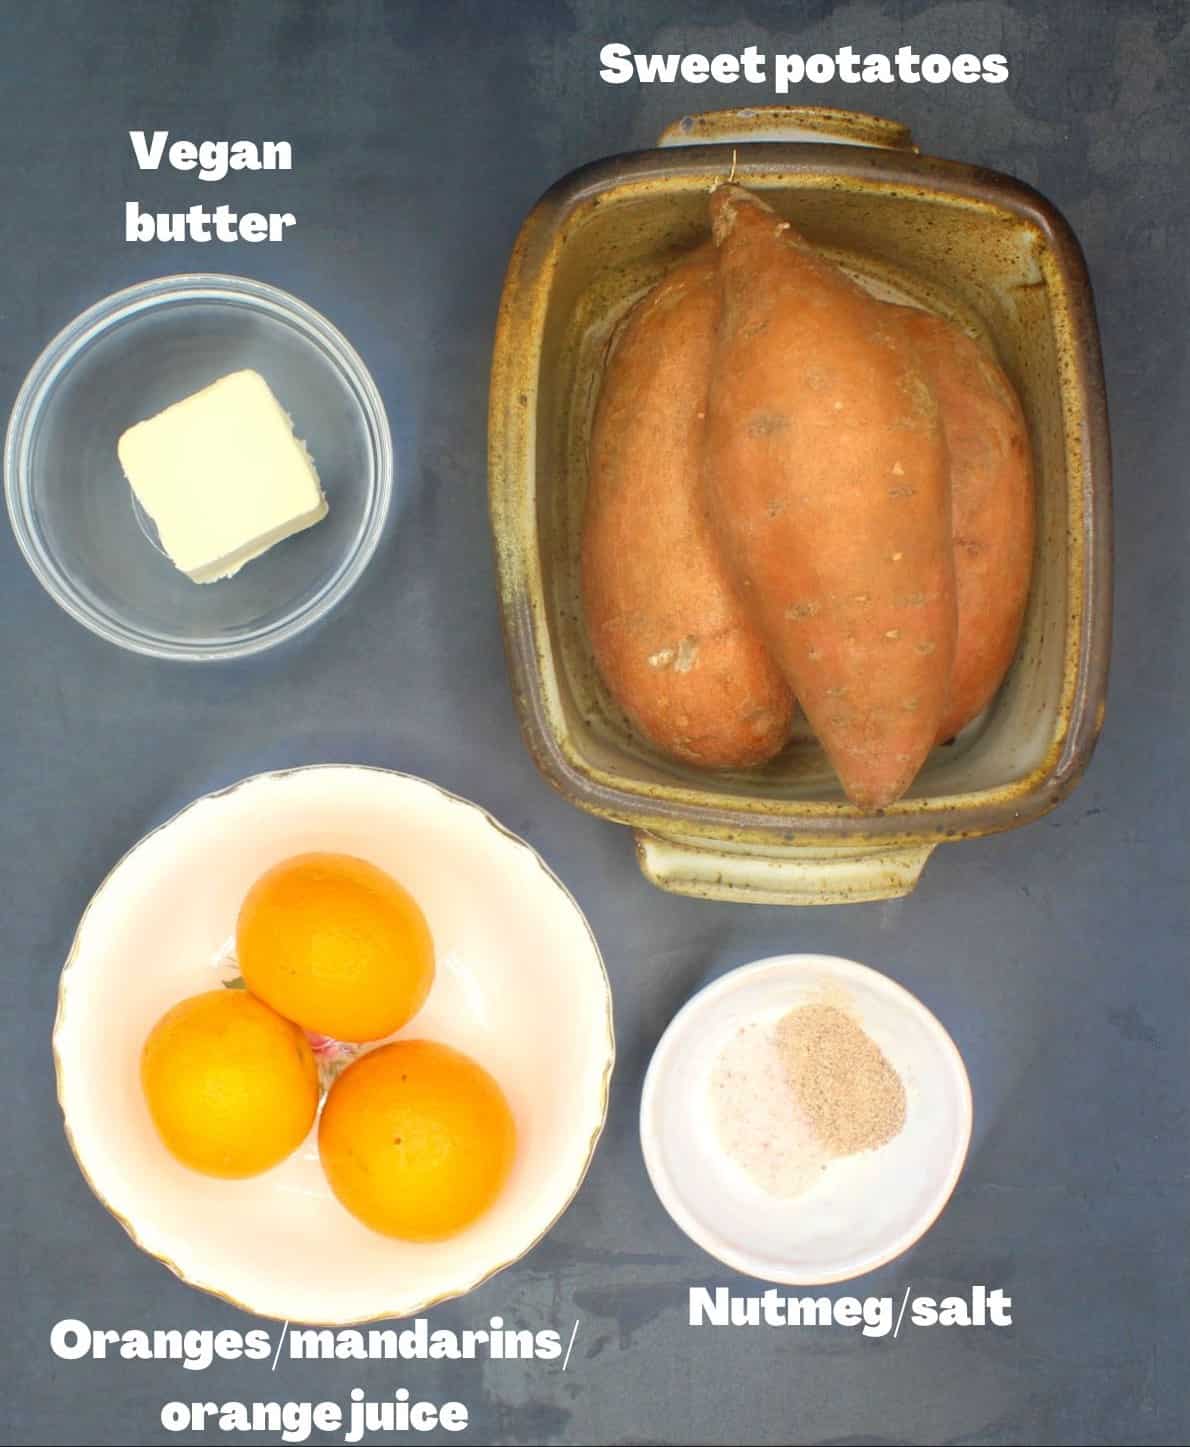 Ingredients for vegan mashed sweet potatoes in bowls.